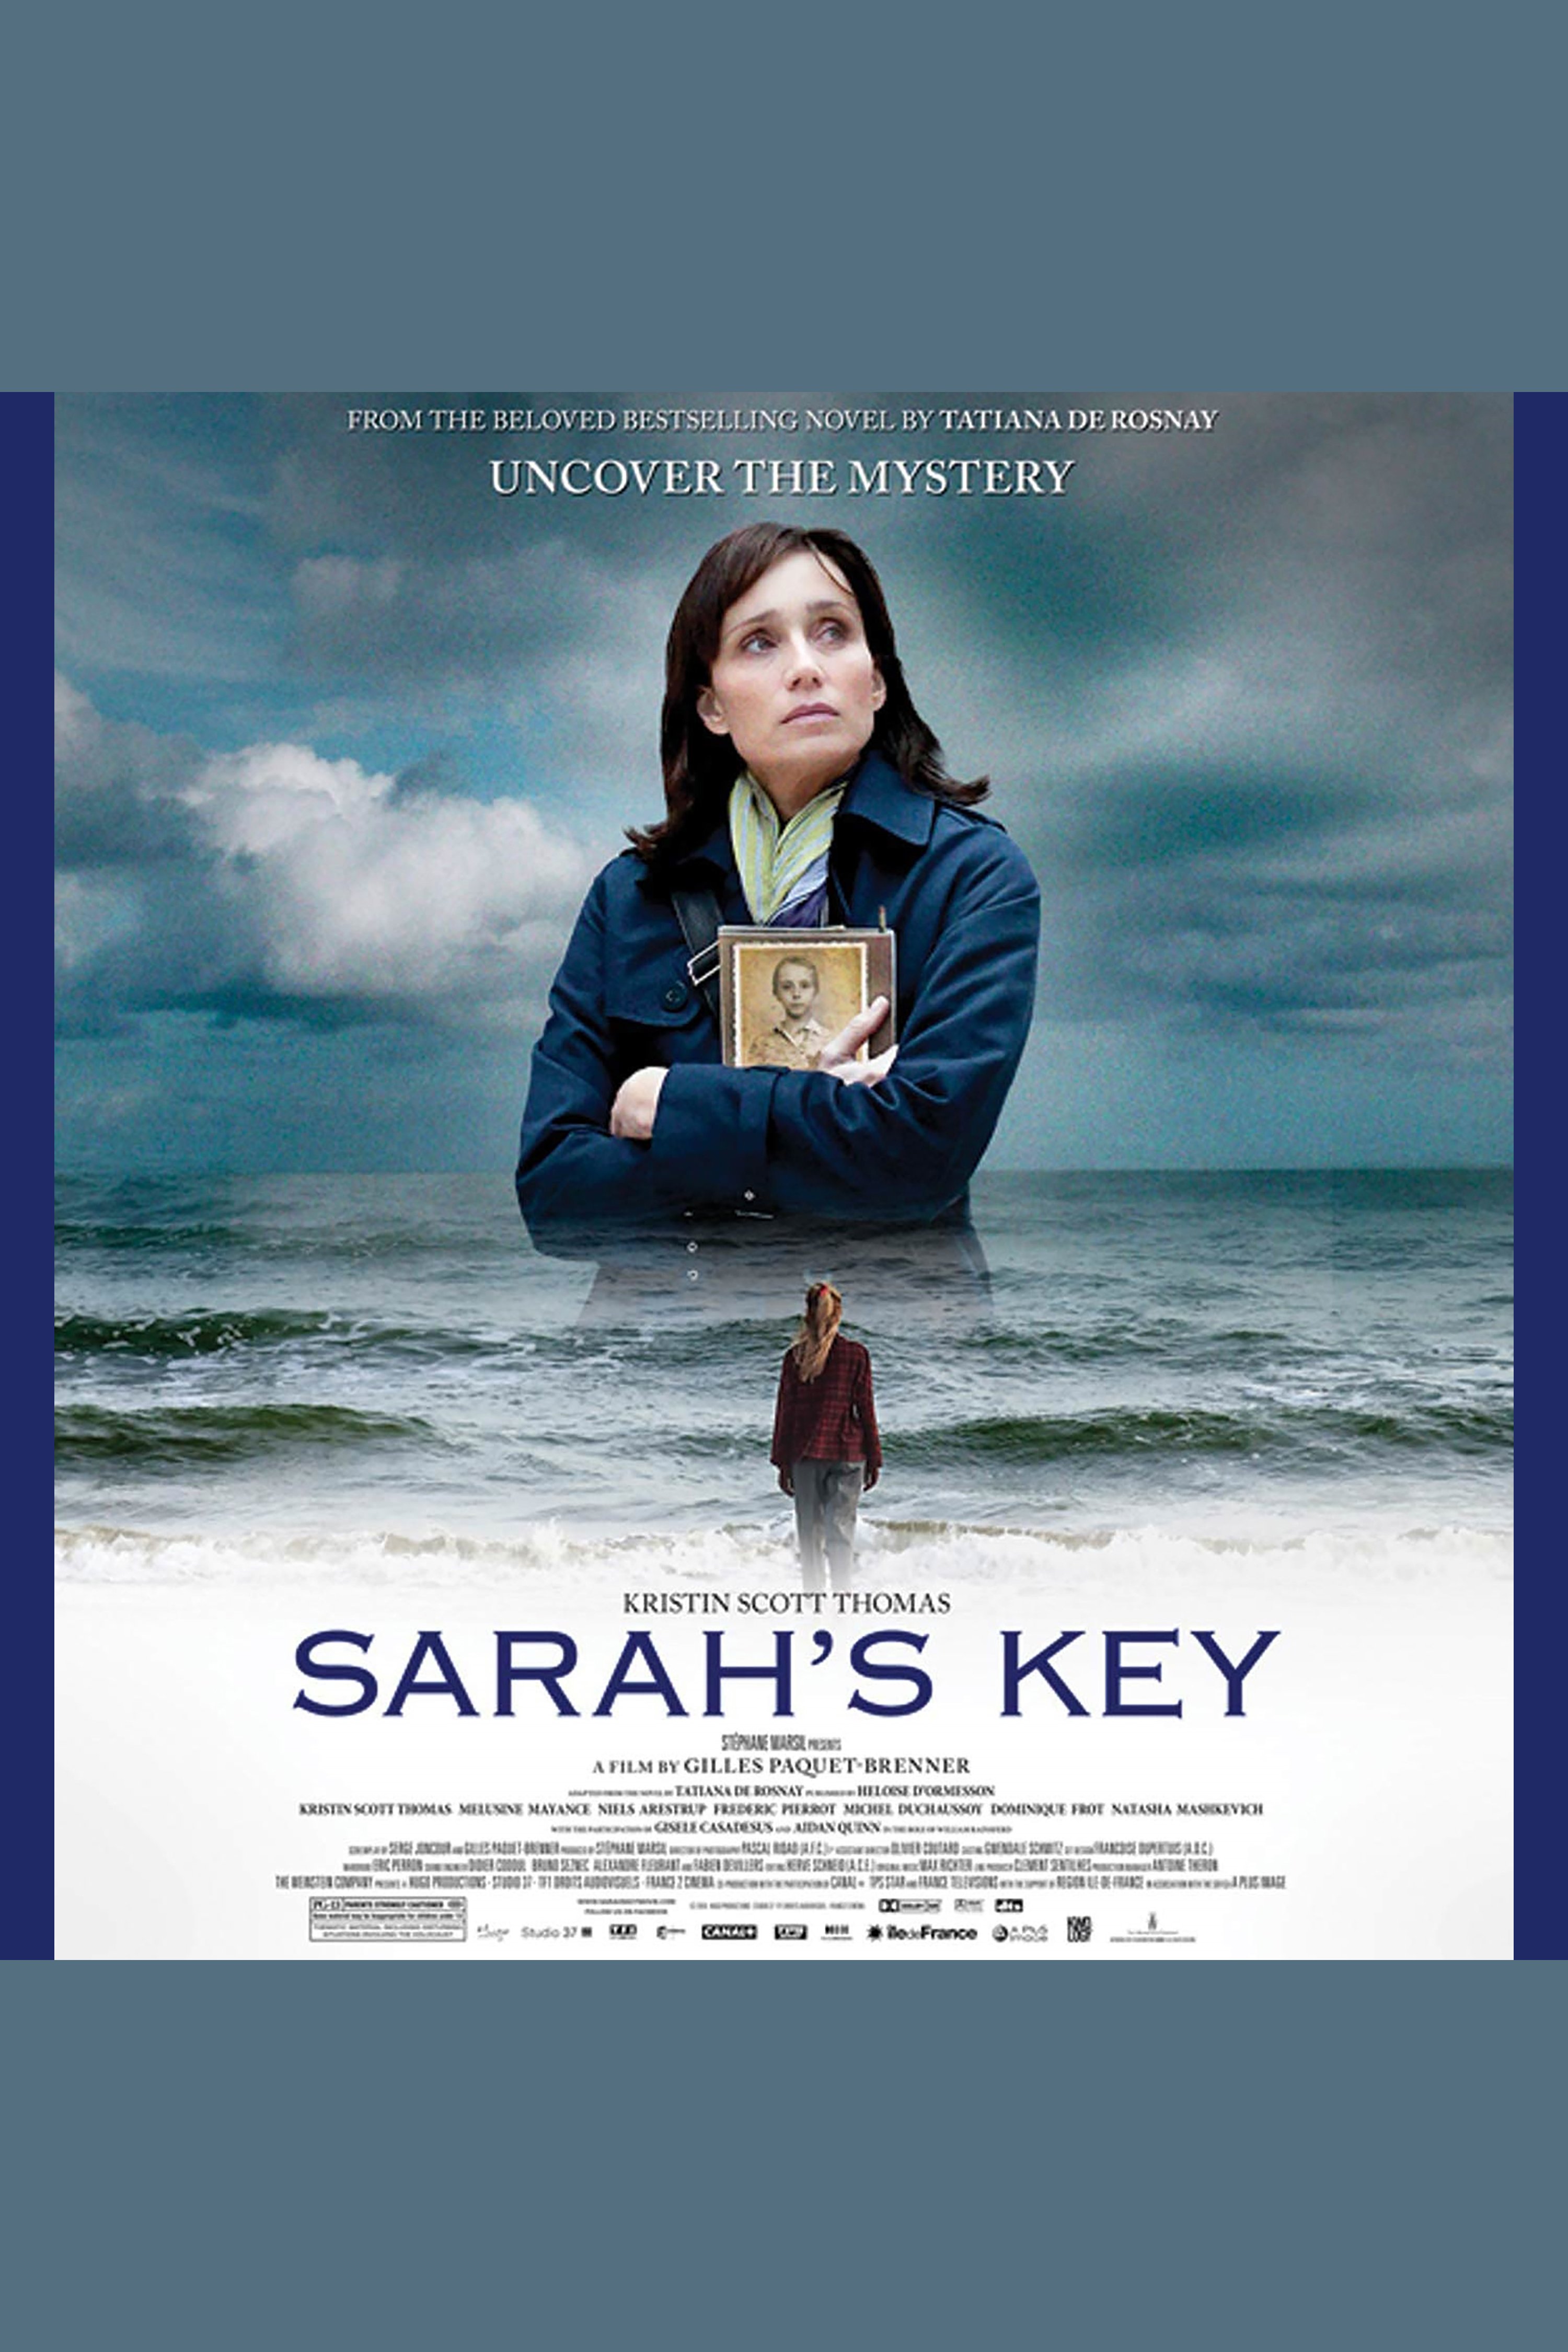 Sarah's key cover image